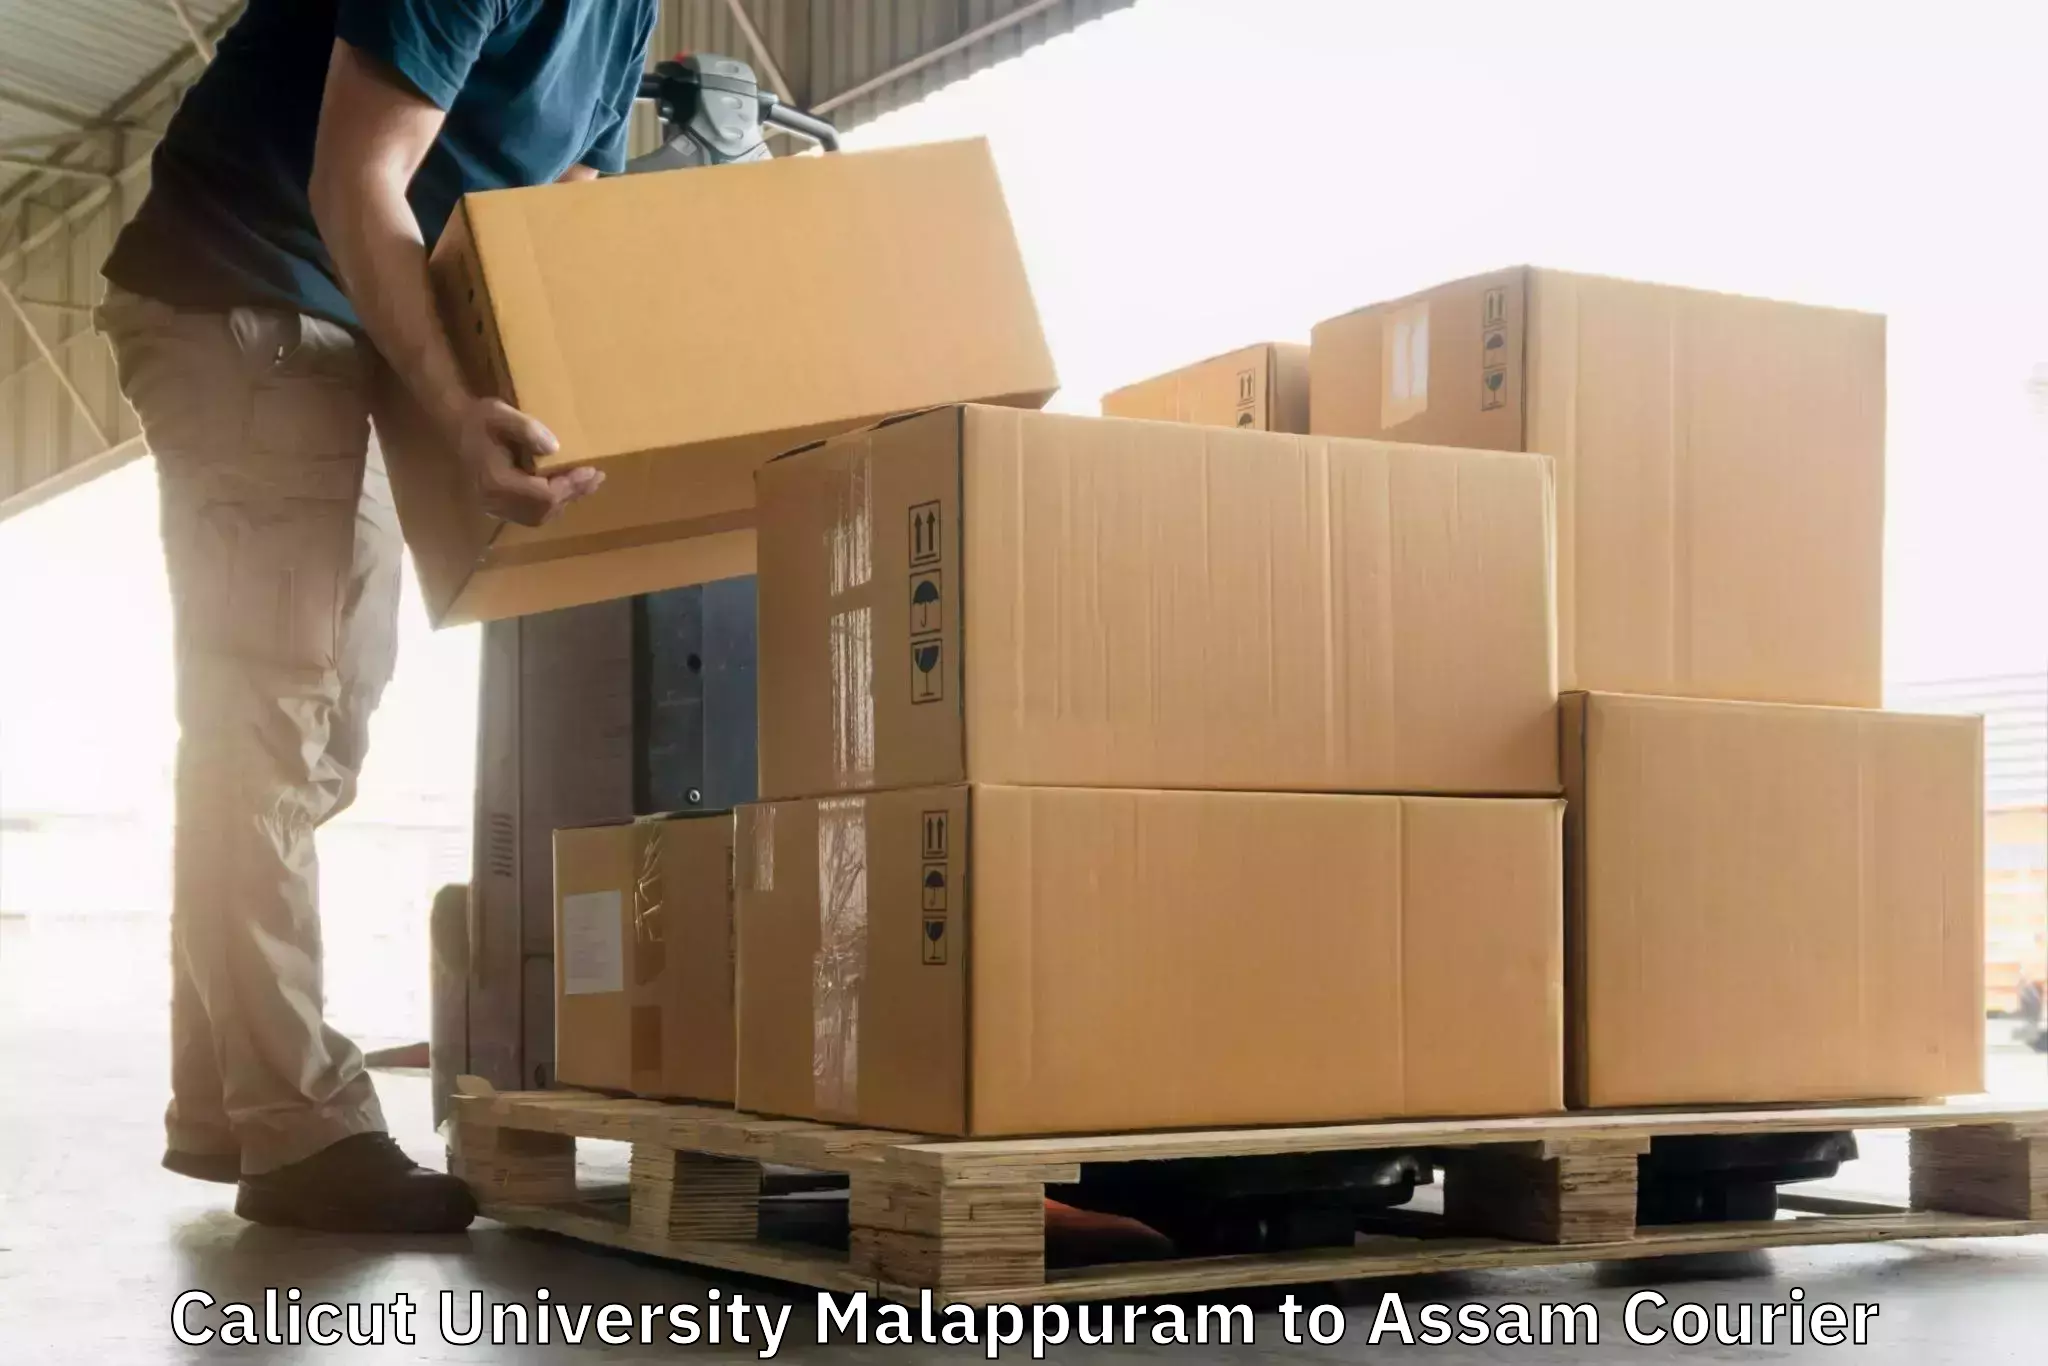 Professional courier handling Calicut University Malappuram to Dibrugarh